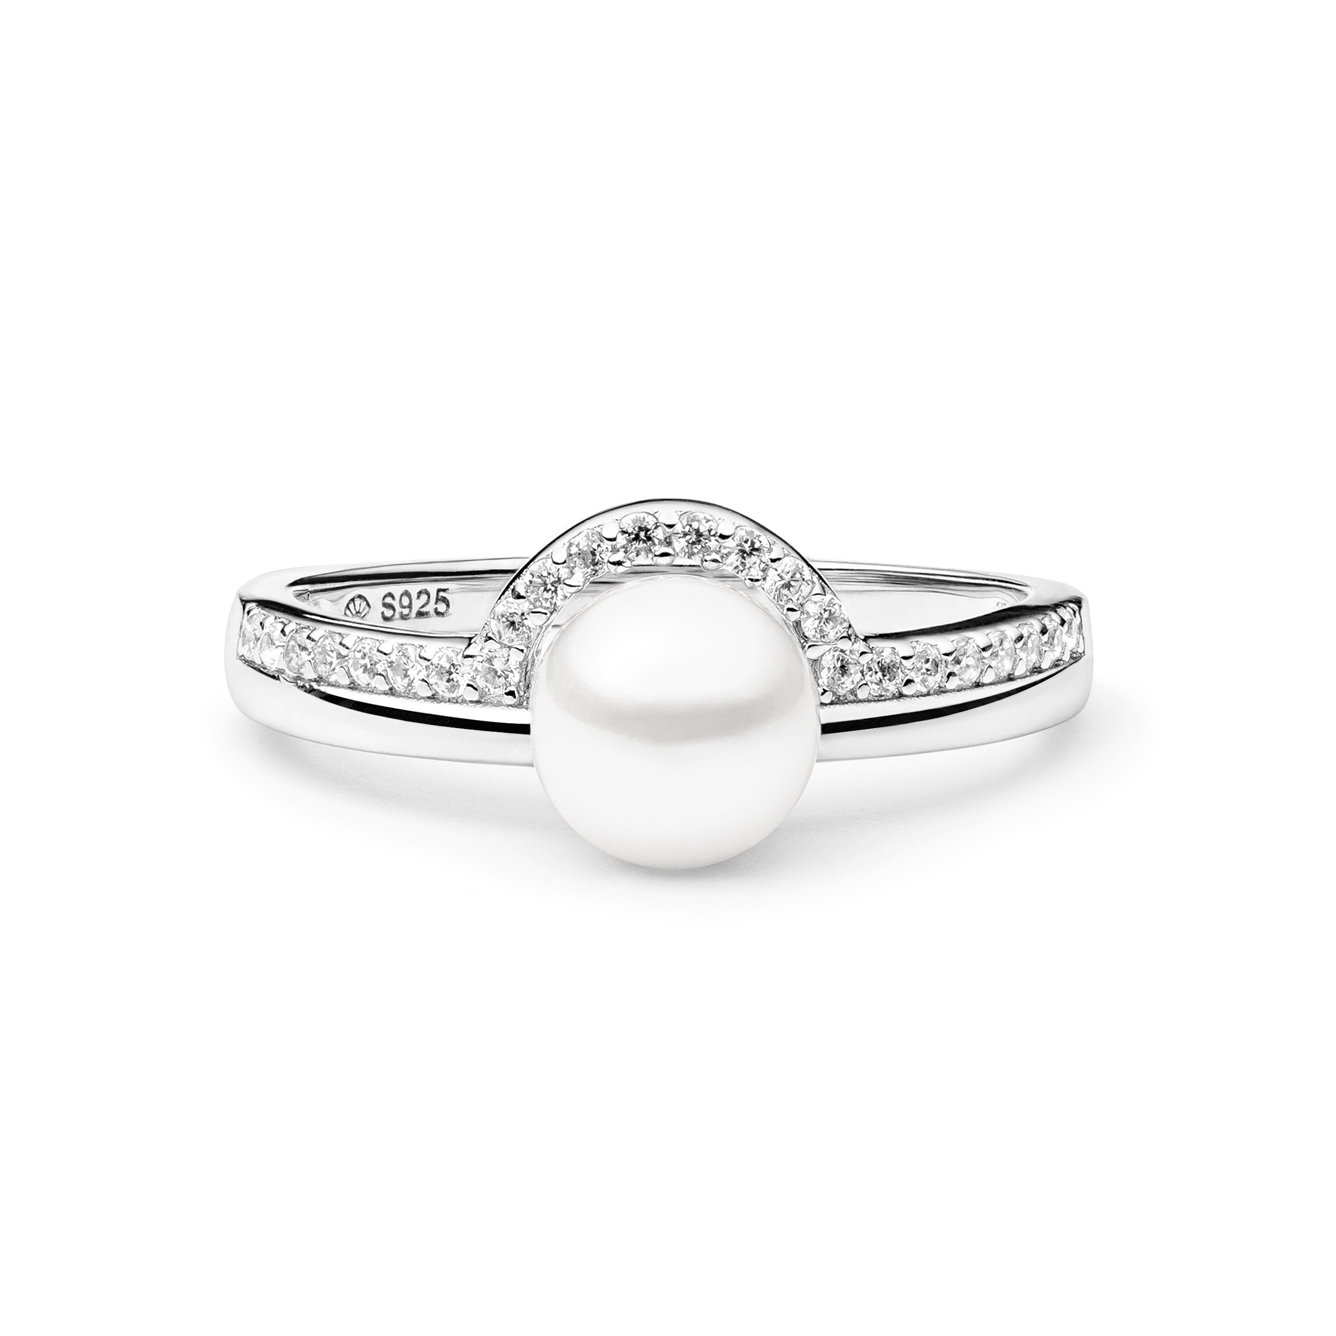 GAURA Stříbrný prsten s bílou perlou a zirkony - velikost 51 - GA4008W-51